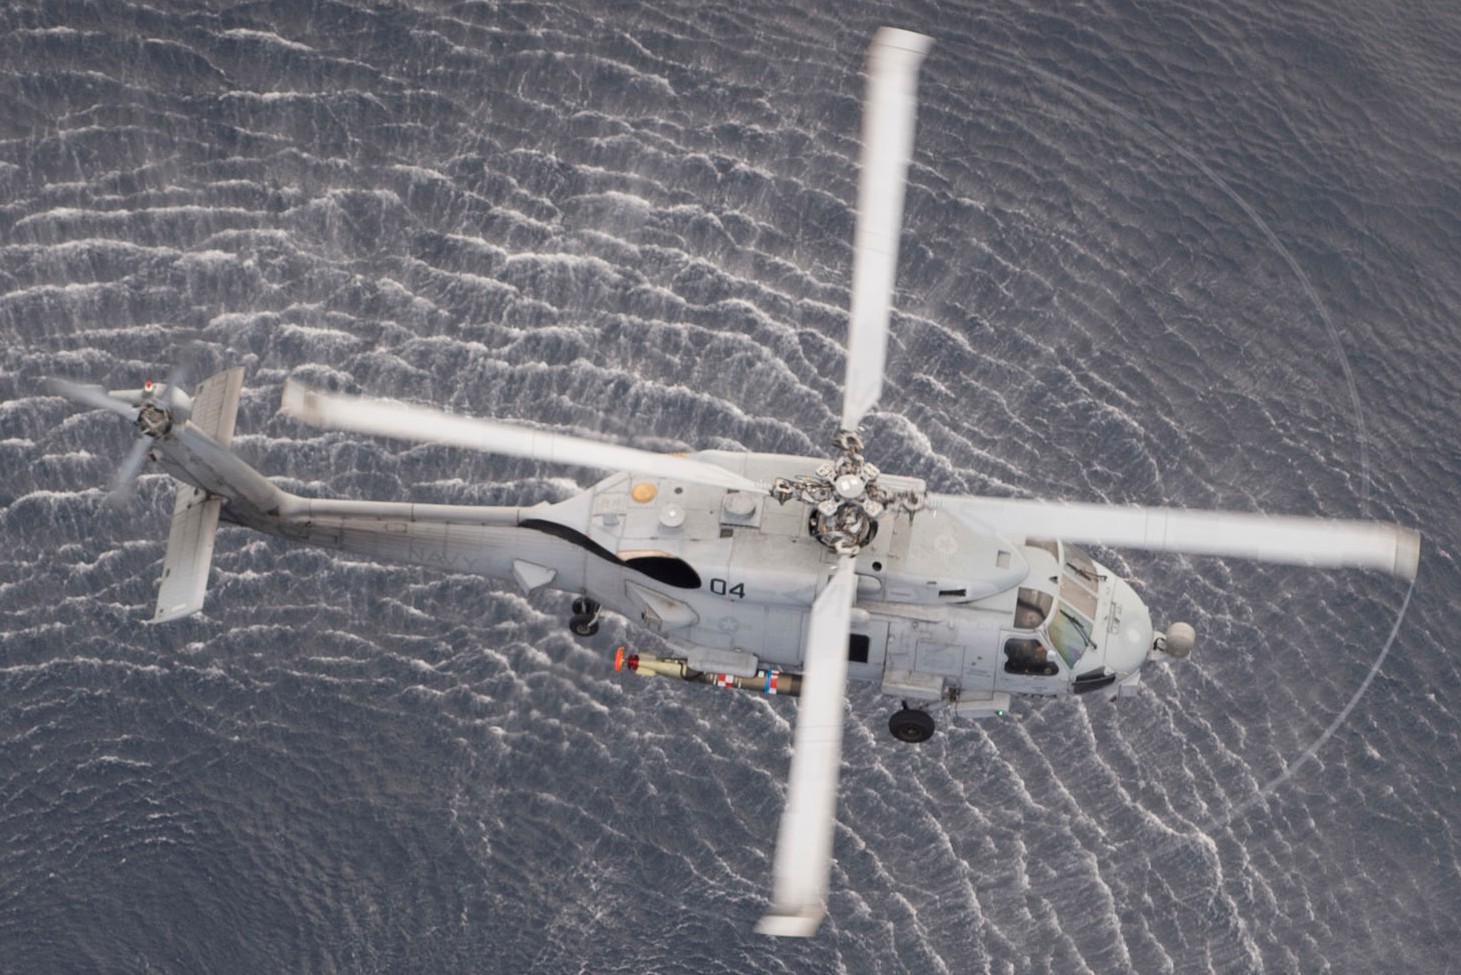 hsm-71 raptors helicopter maritime strike squadron mh-60r seahawk navy 2015 15 mk-46 torpedo